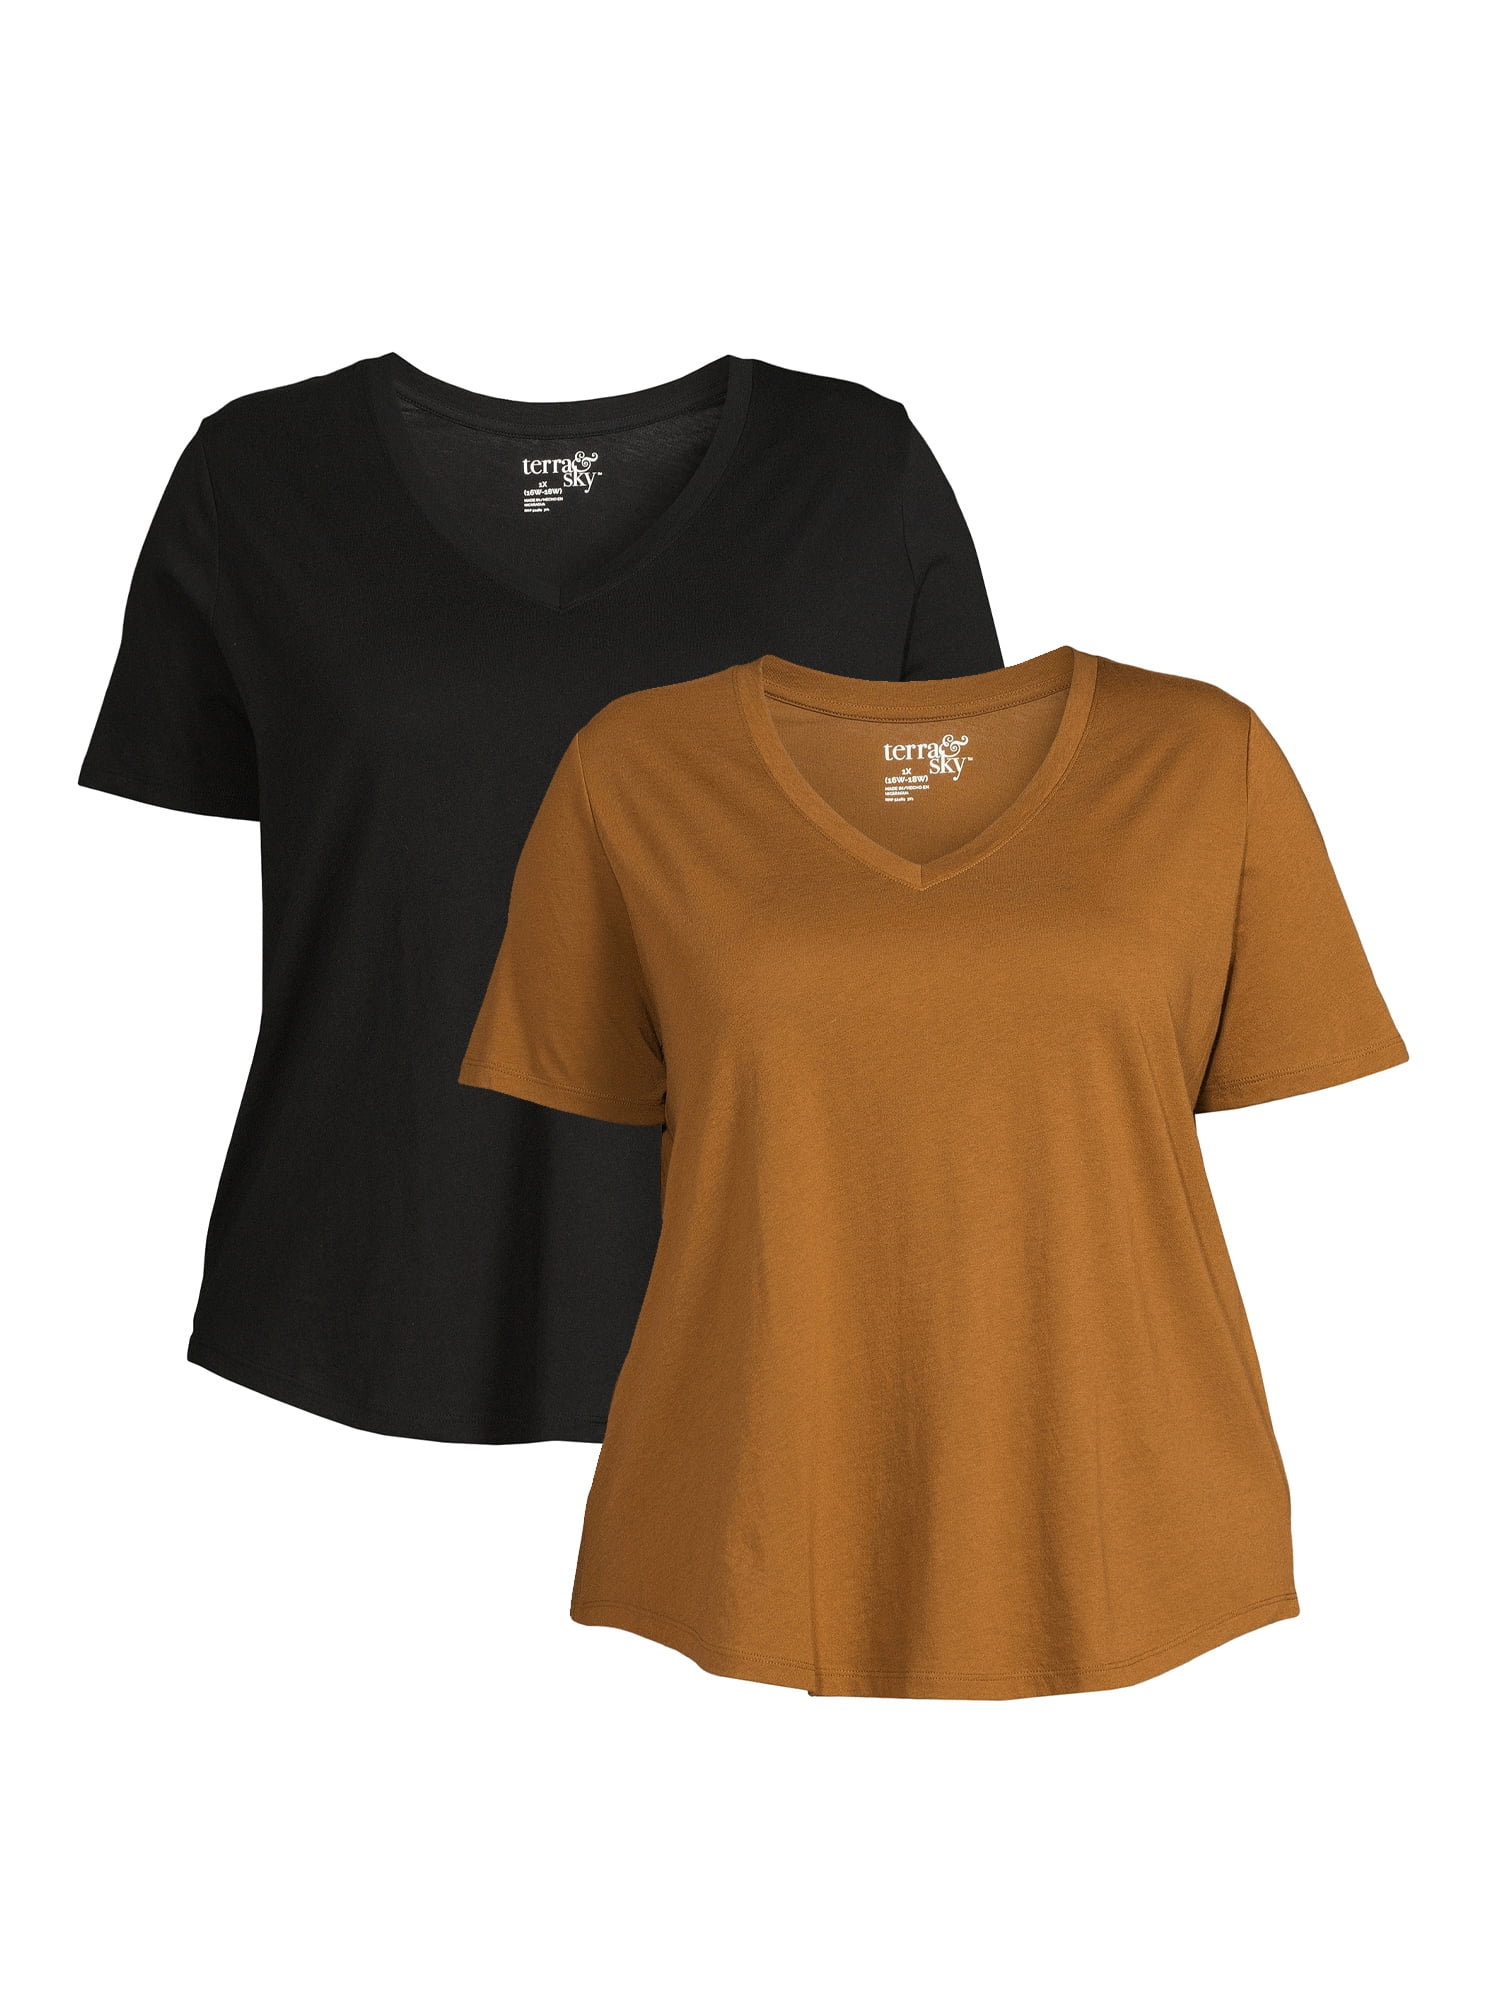 Terra & Sky Women's Size V-Neck T-Shirt with Sleeves, 2-Pack - Walmart.com